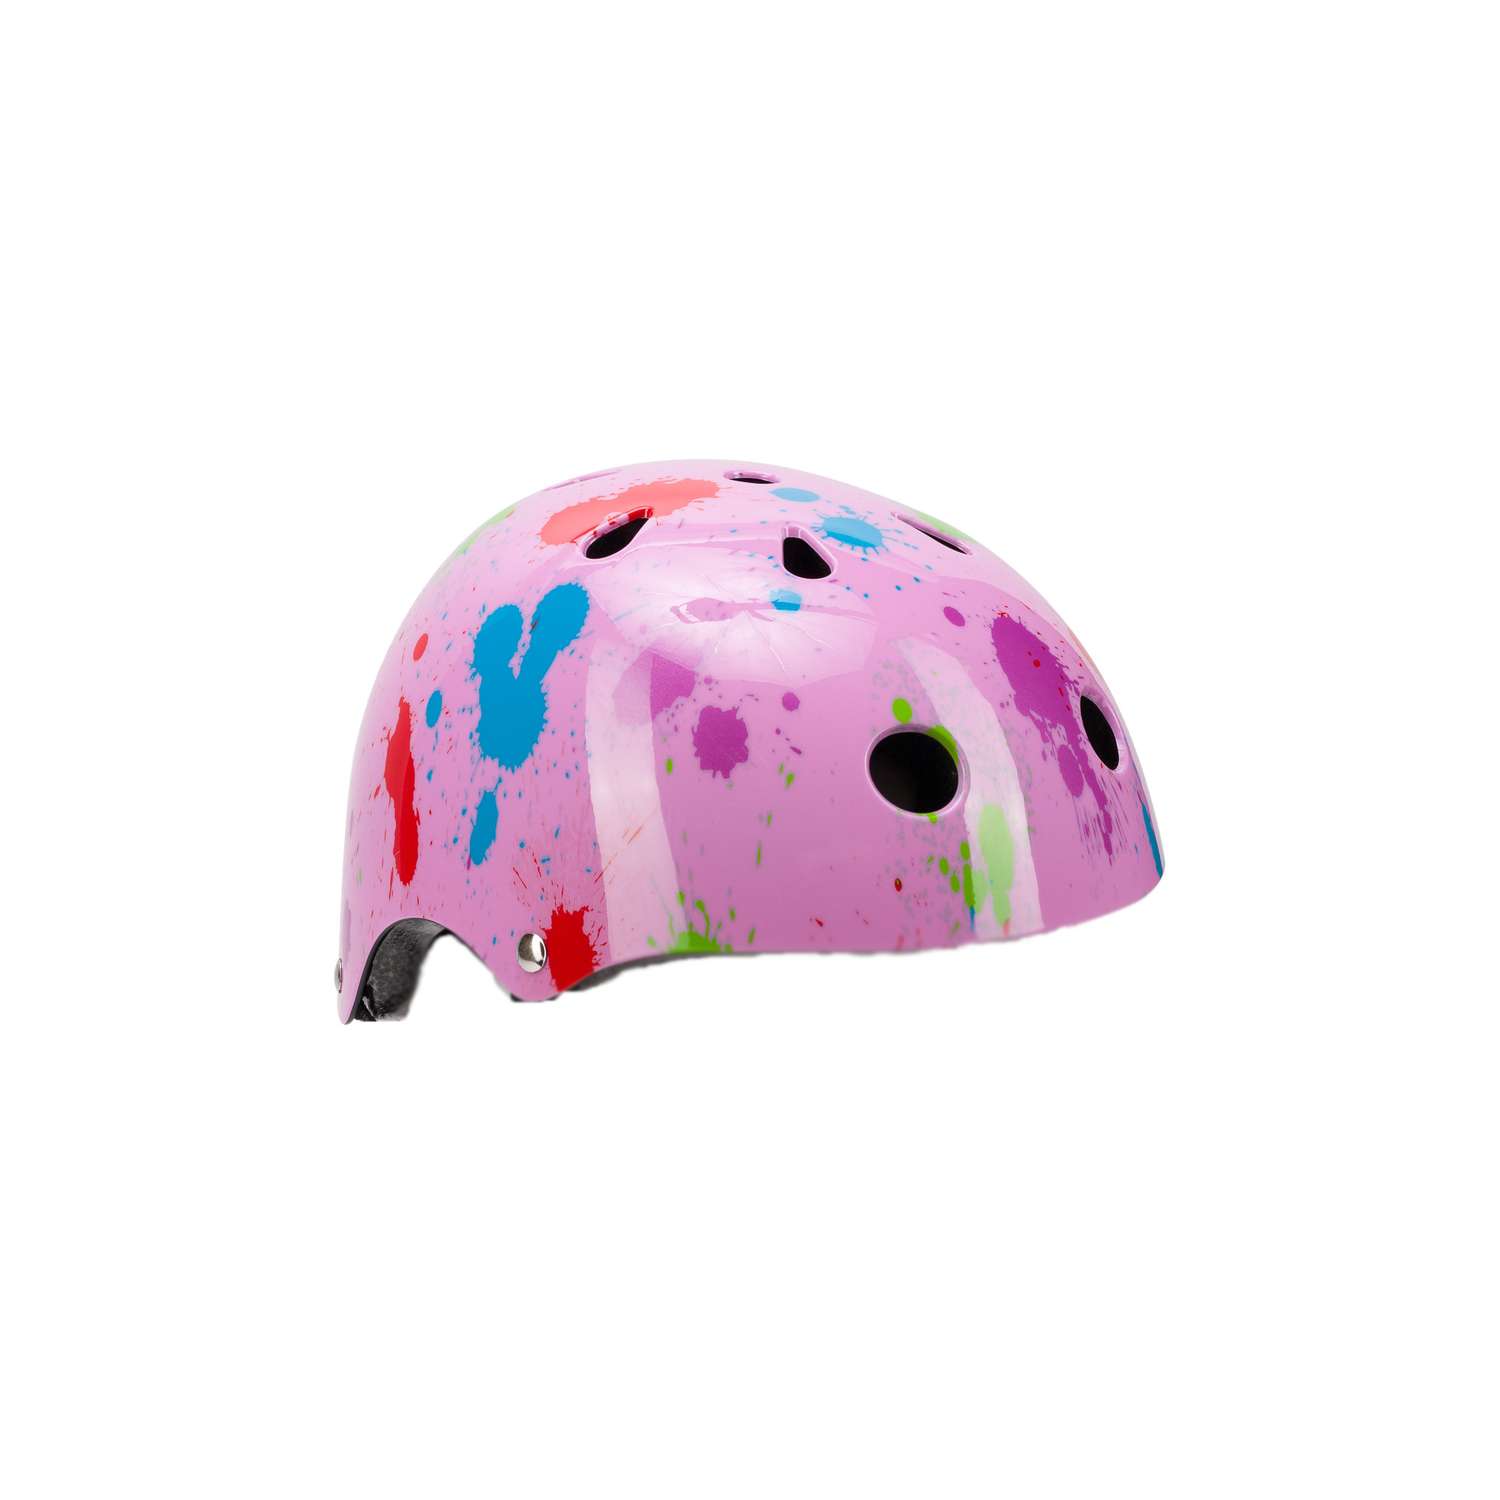 Шлем защитный SXRide YXHEM06 розовый с рисунком граффити размер S 47-53 см - фото 1